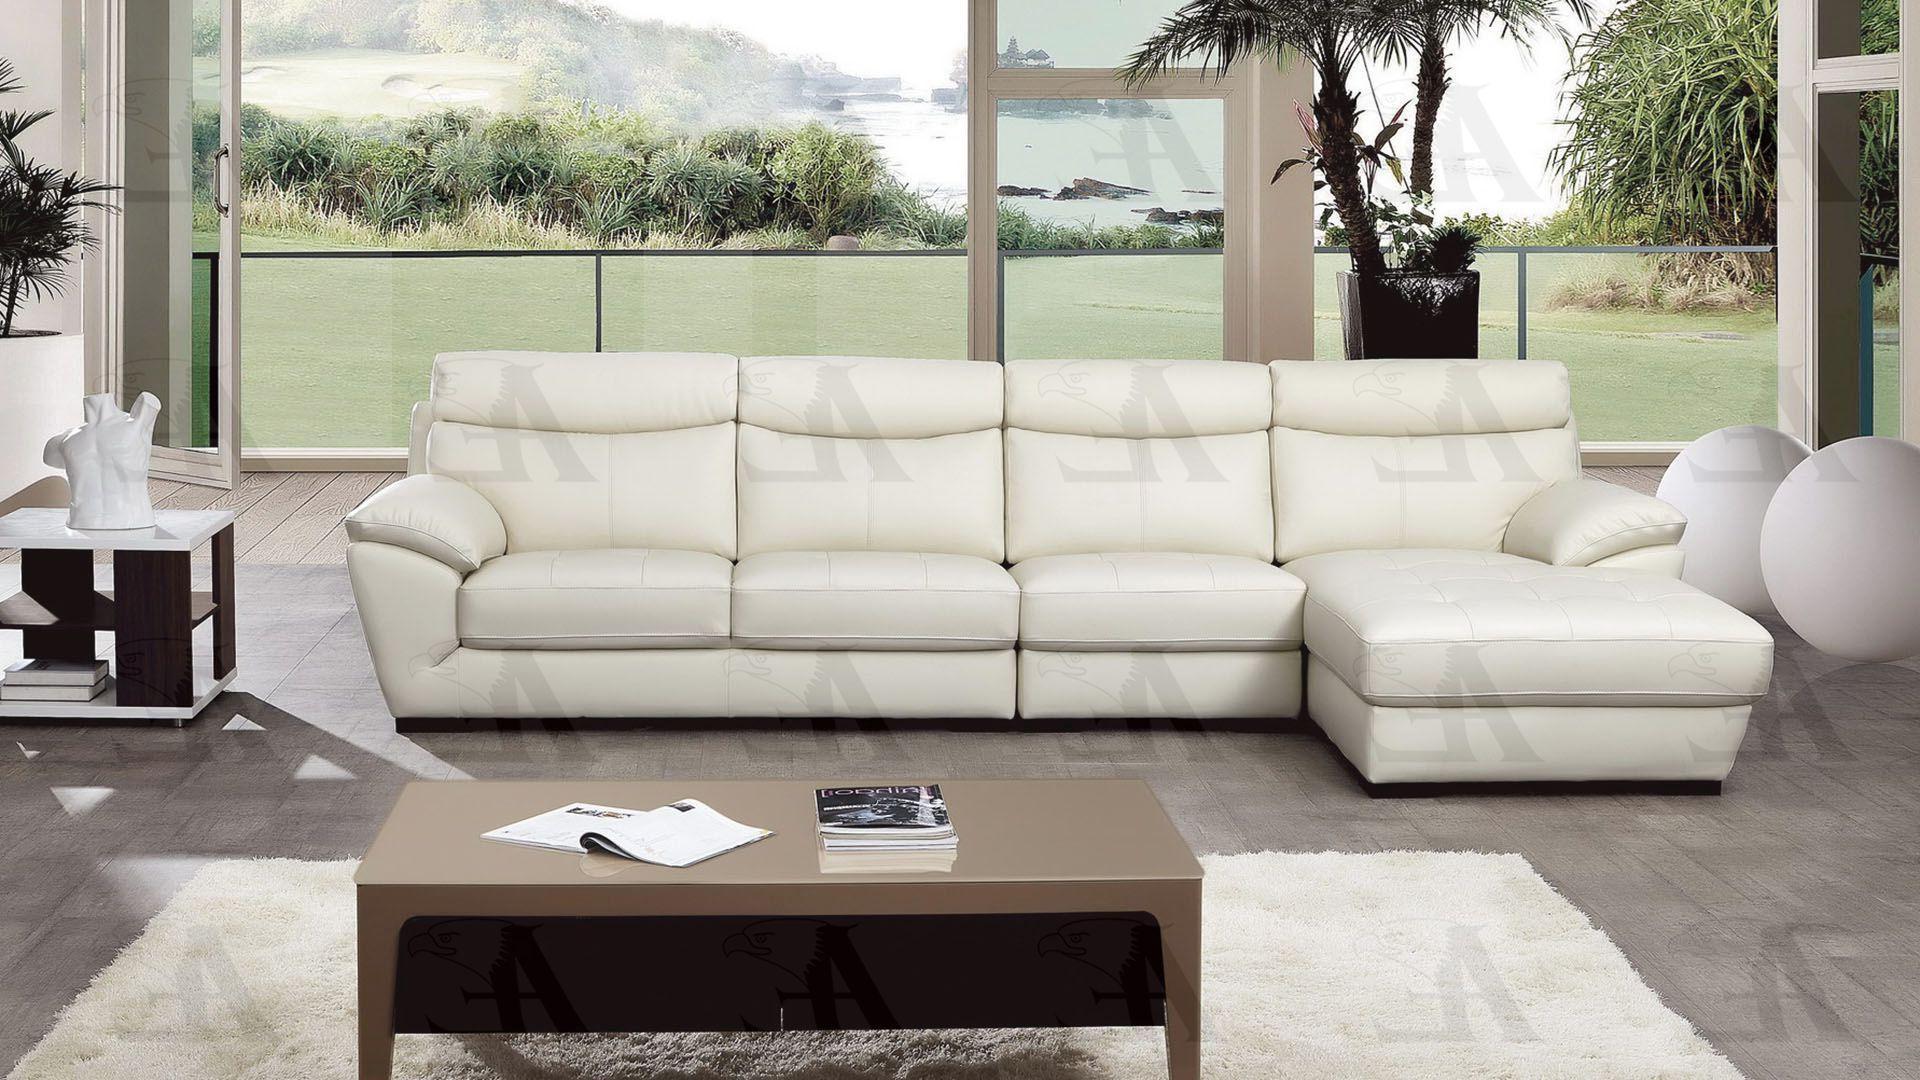 

    
American Eagle Furniture EK-L021-W Sectional Sofa White EK-L021R-W
